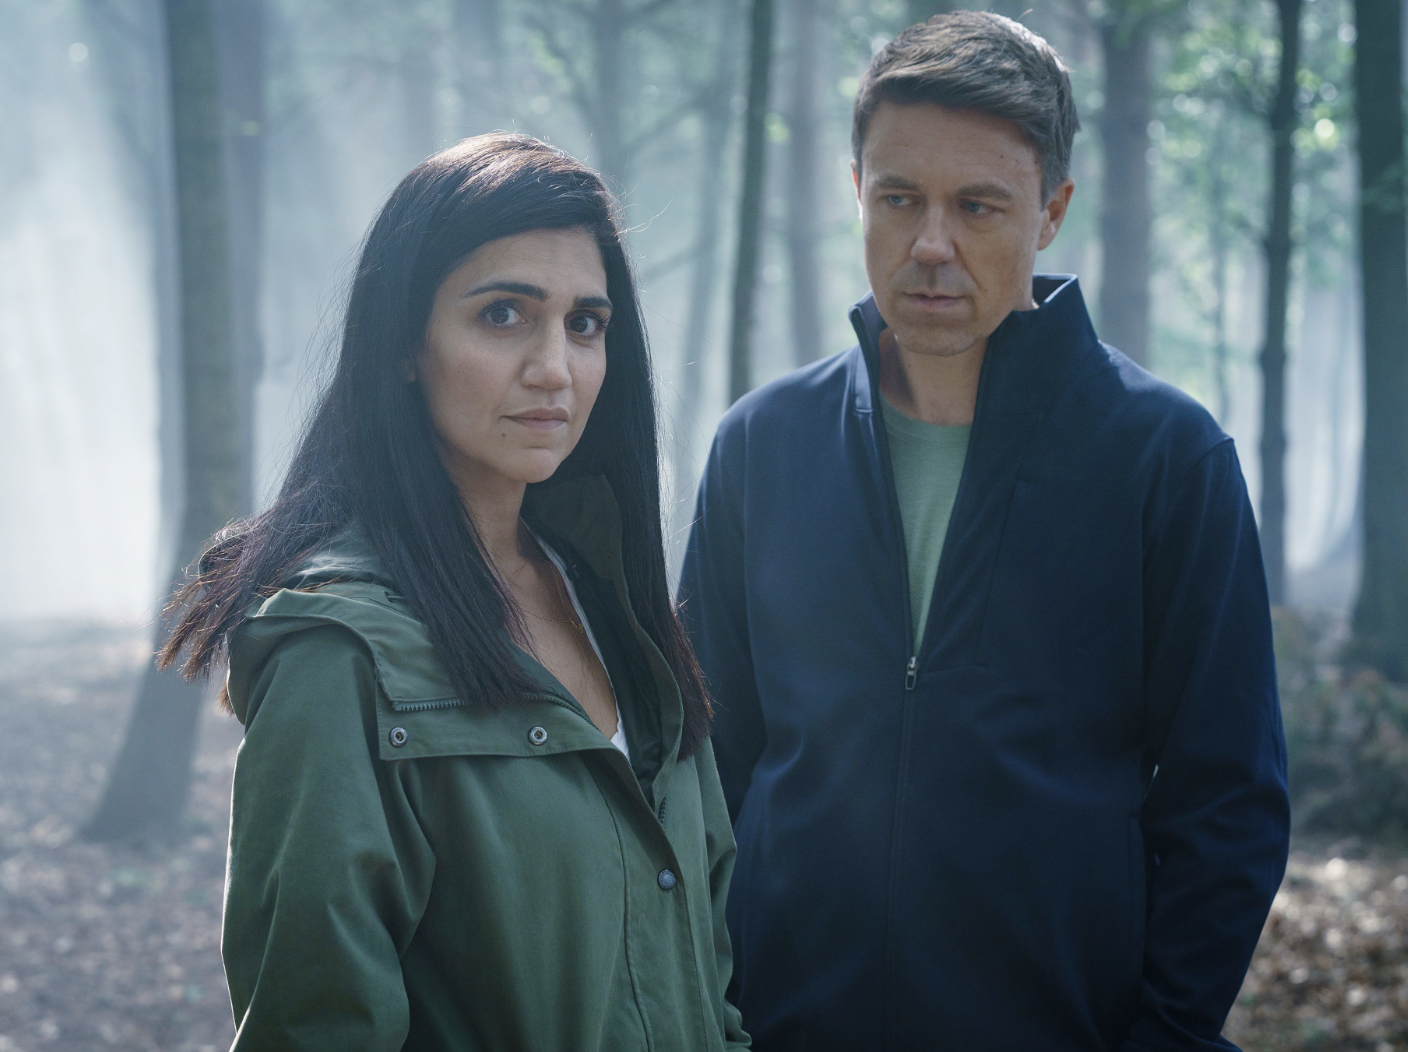 Leeds premiere for new BBC five-part thriller series Better